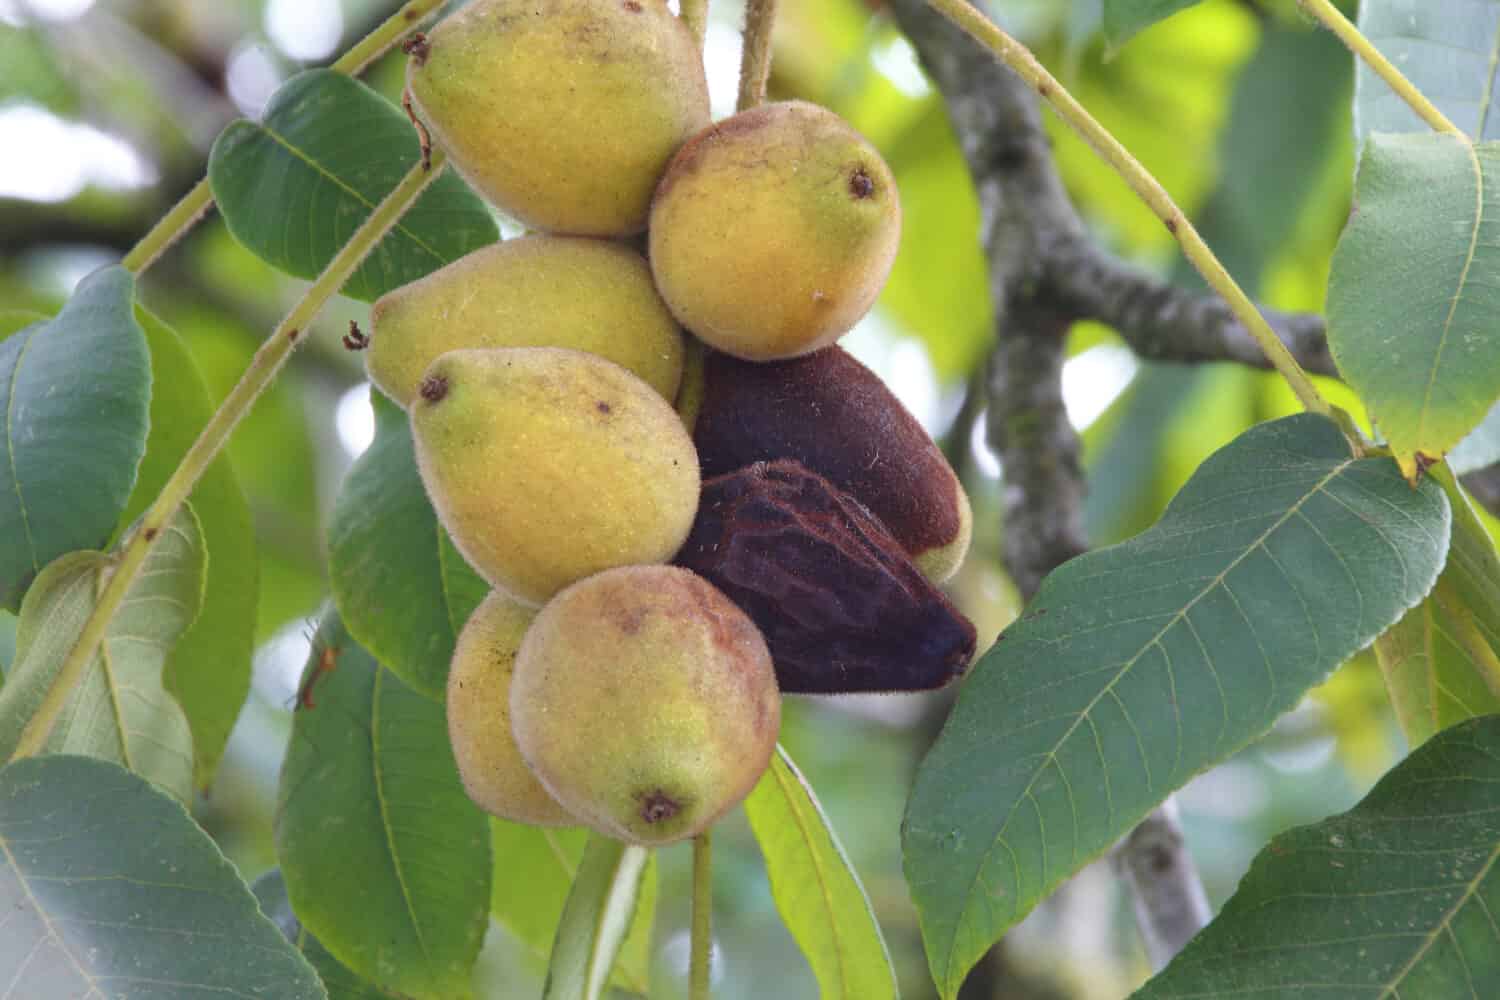 The Celeste variety of figs ripen on a branch/Ripening Celeste Fig/The Celeste variety of figs ripen on a branch. 